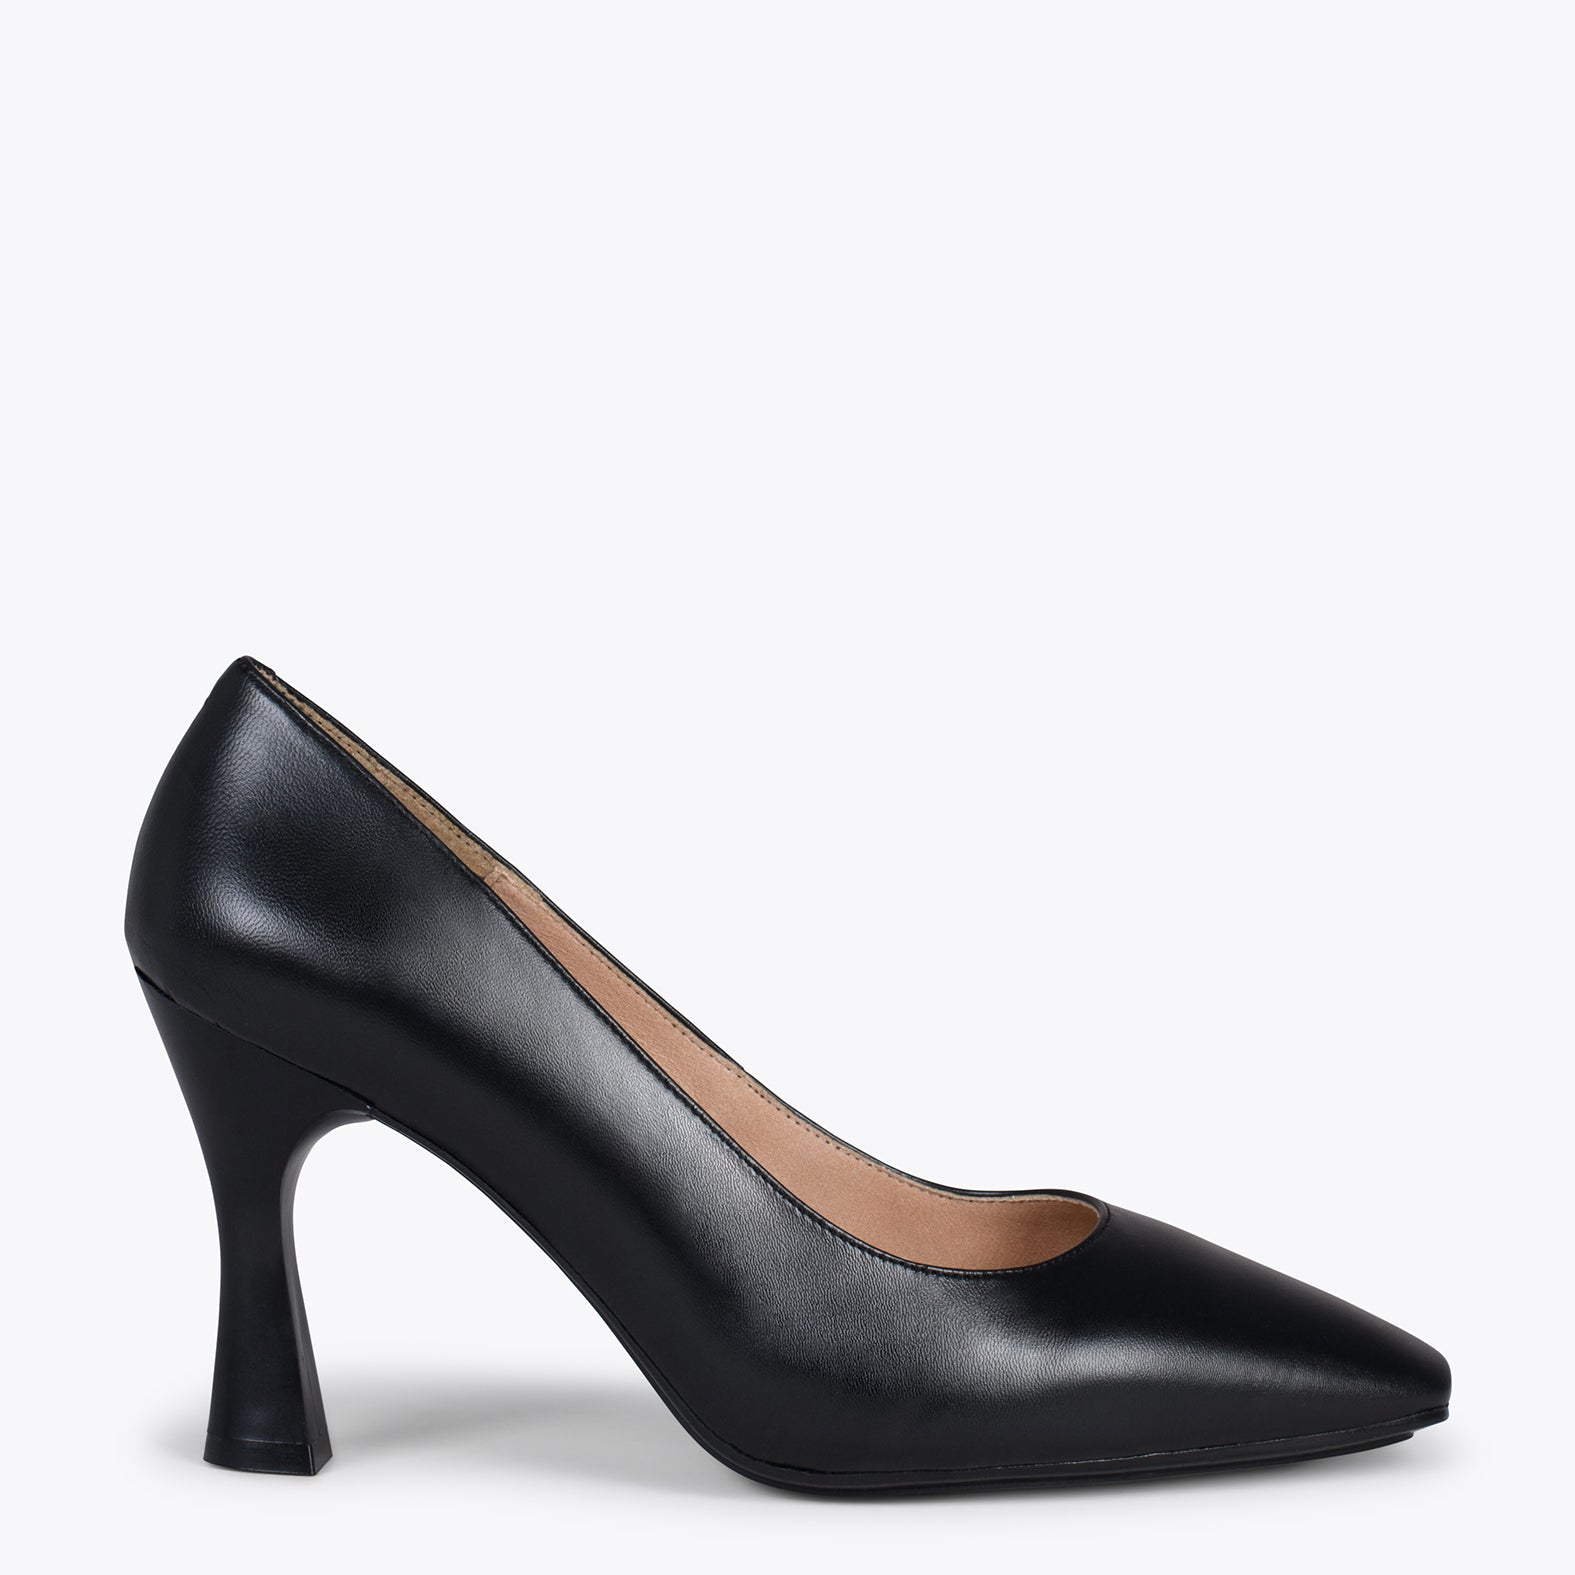 URBAN GLAM – BLACK bell shaped heel